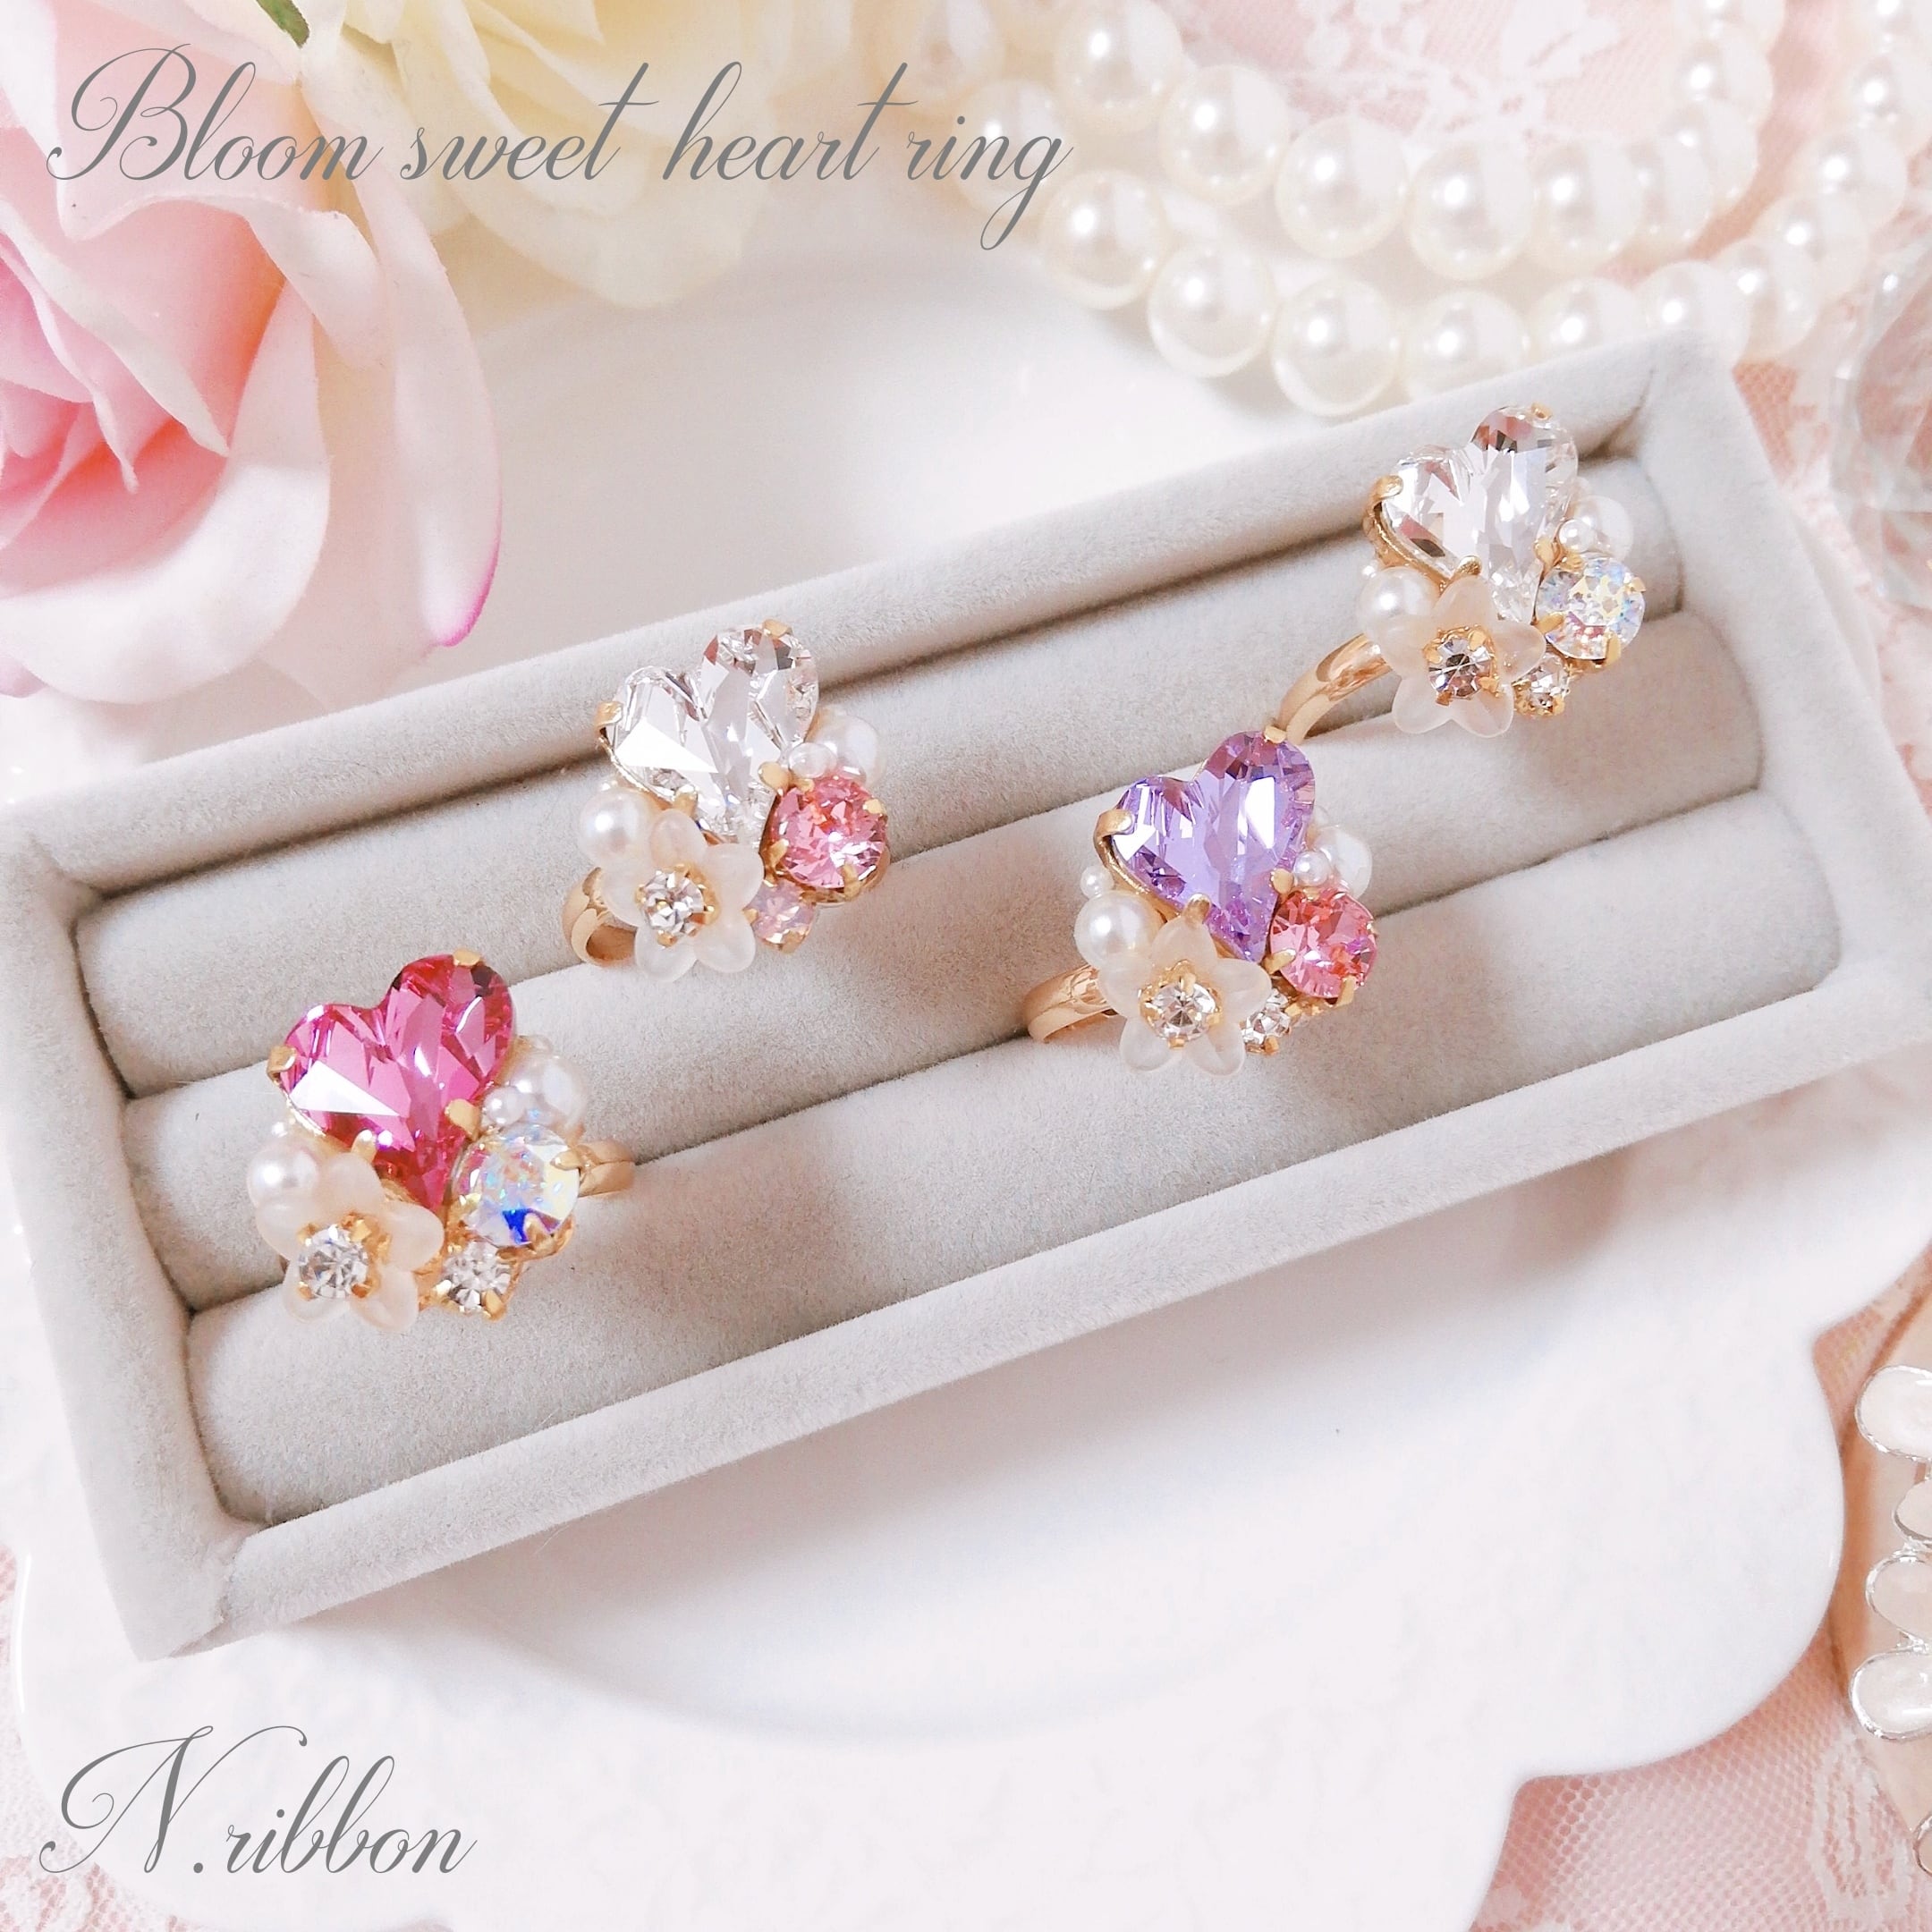 《 Jewelry sweet heart ring 》ジュエリースウィートハートリング | N.ribbon  ＊handmadeaccessories＊ powered by BASE